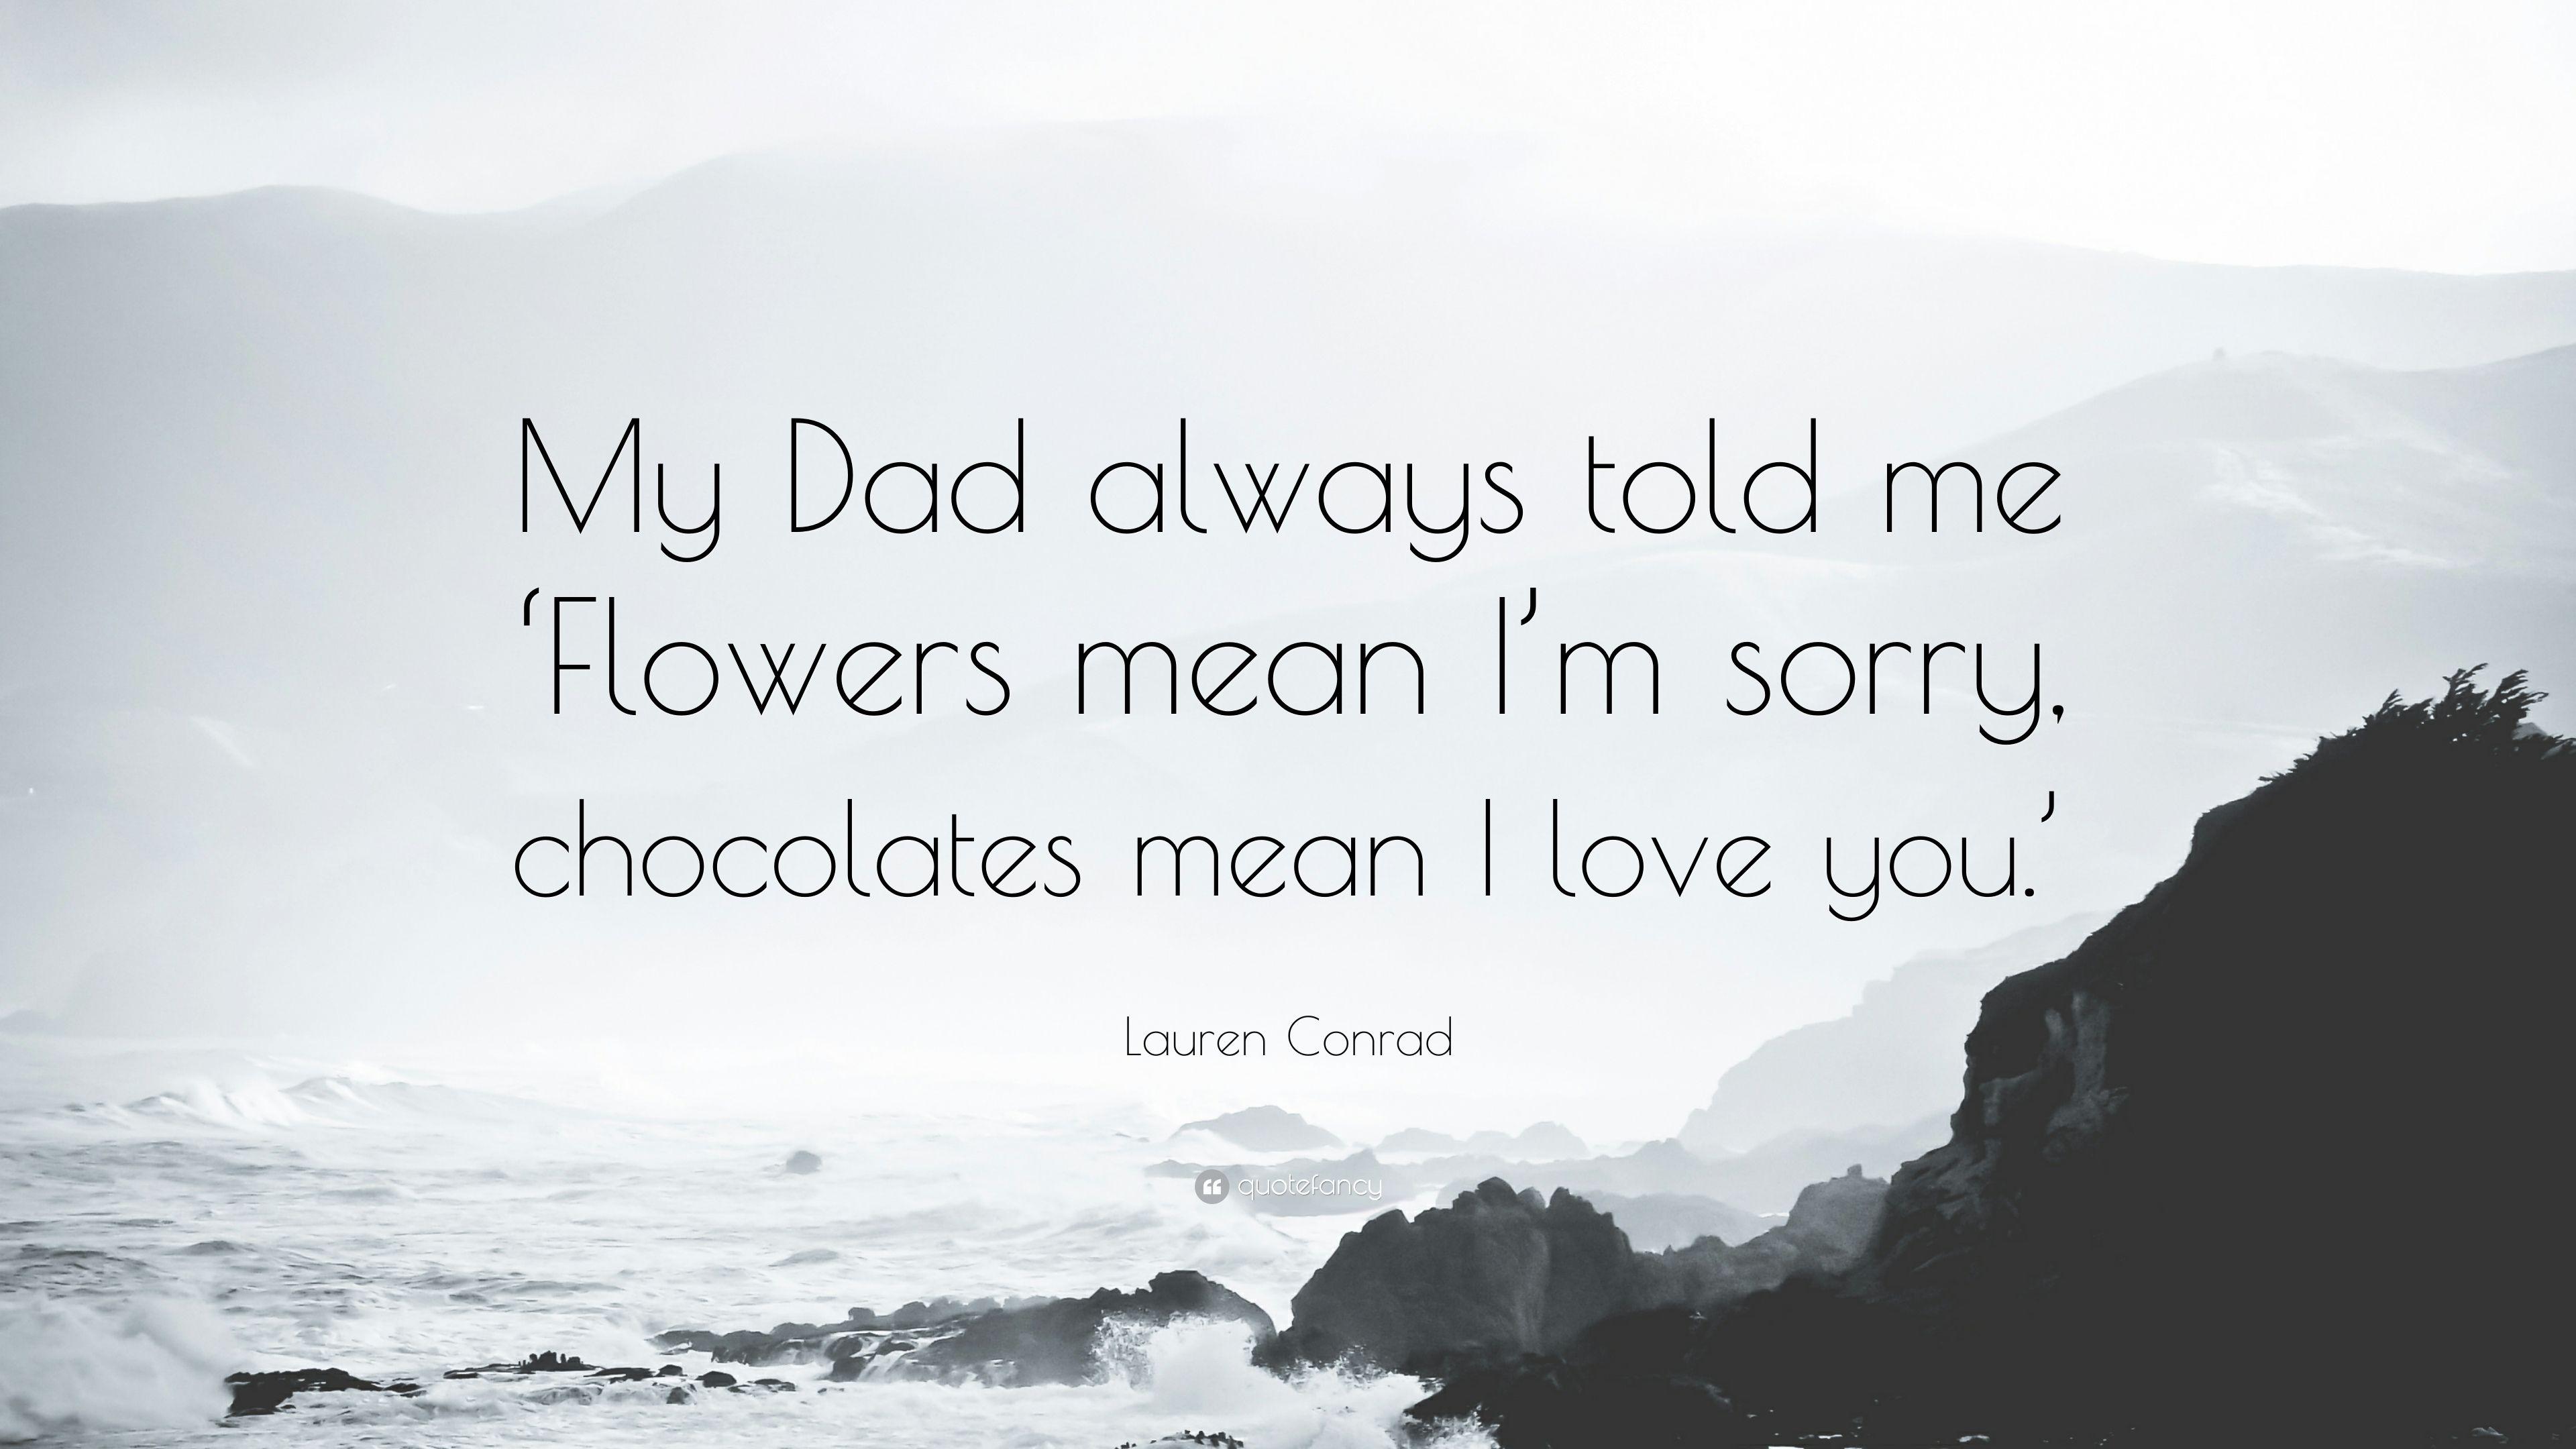 Lauren Conrad Quote: "My Dad always told me 'Flowers mean I'...